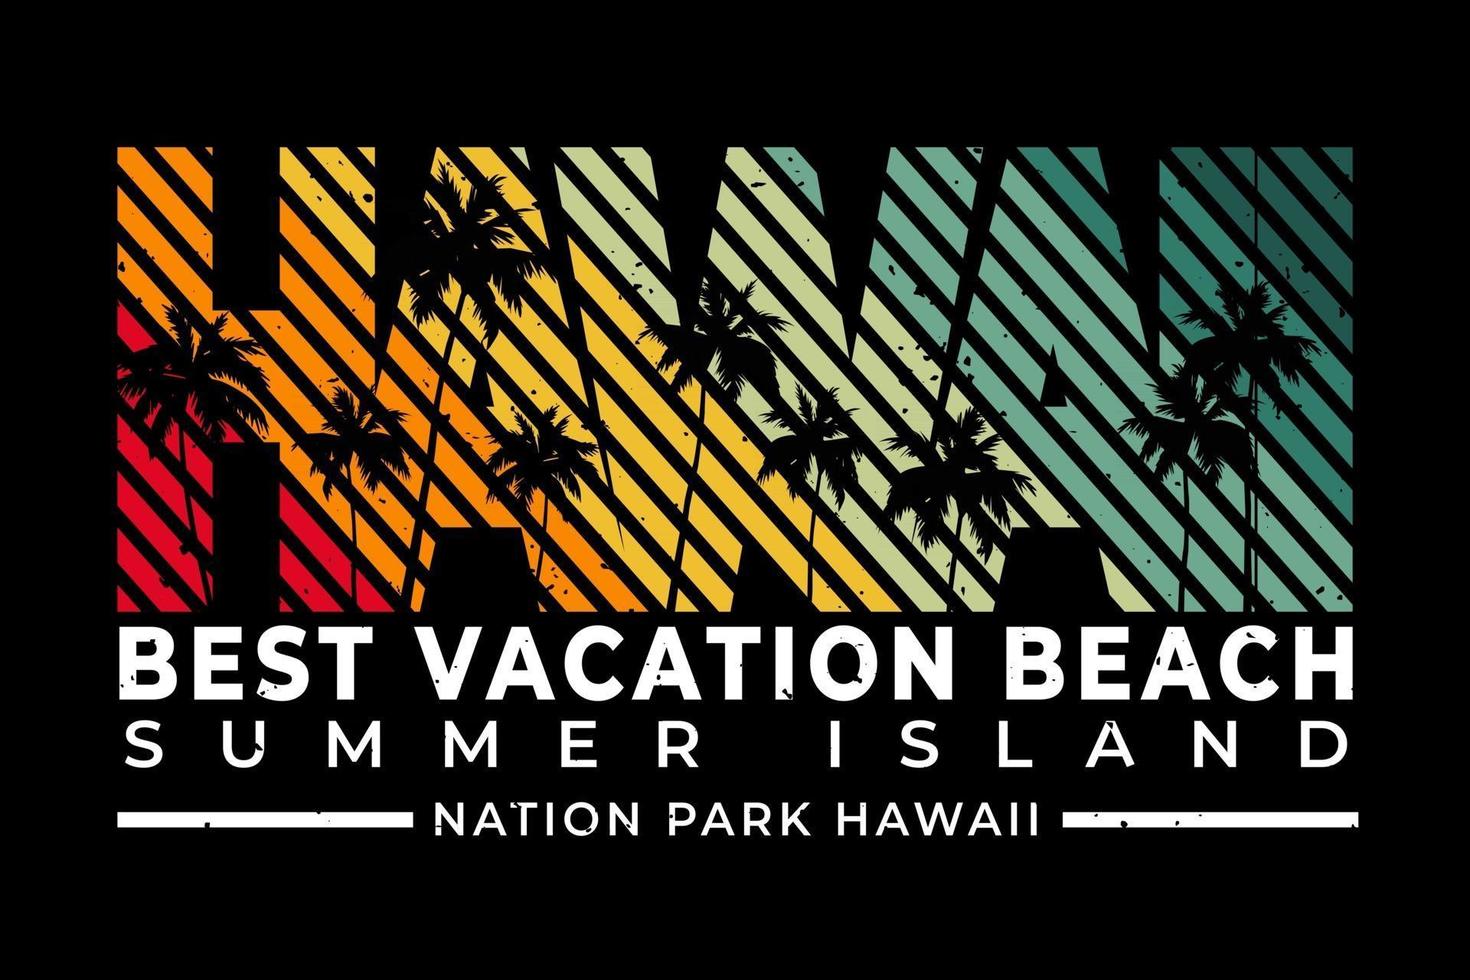 T-shirt hawaii beach vacation summer island retro style vector